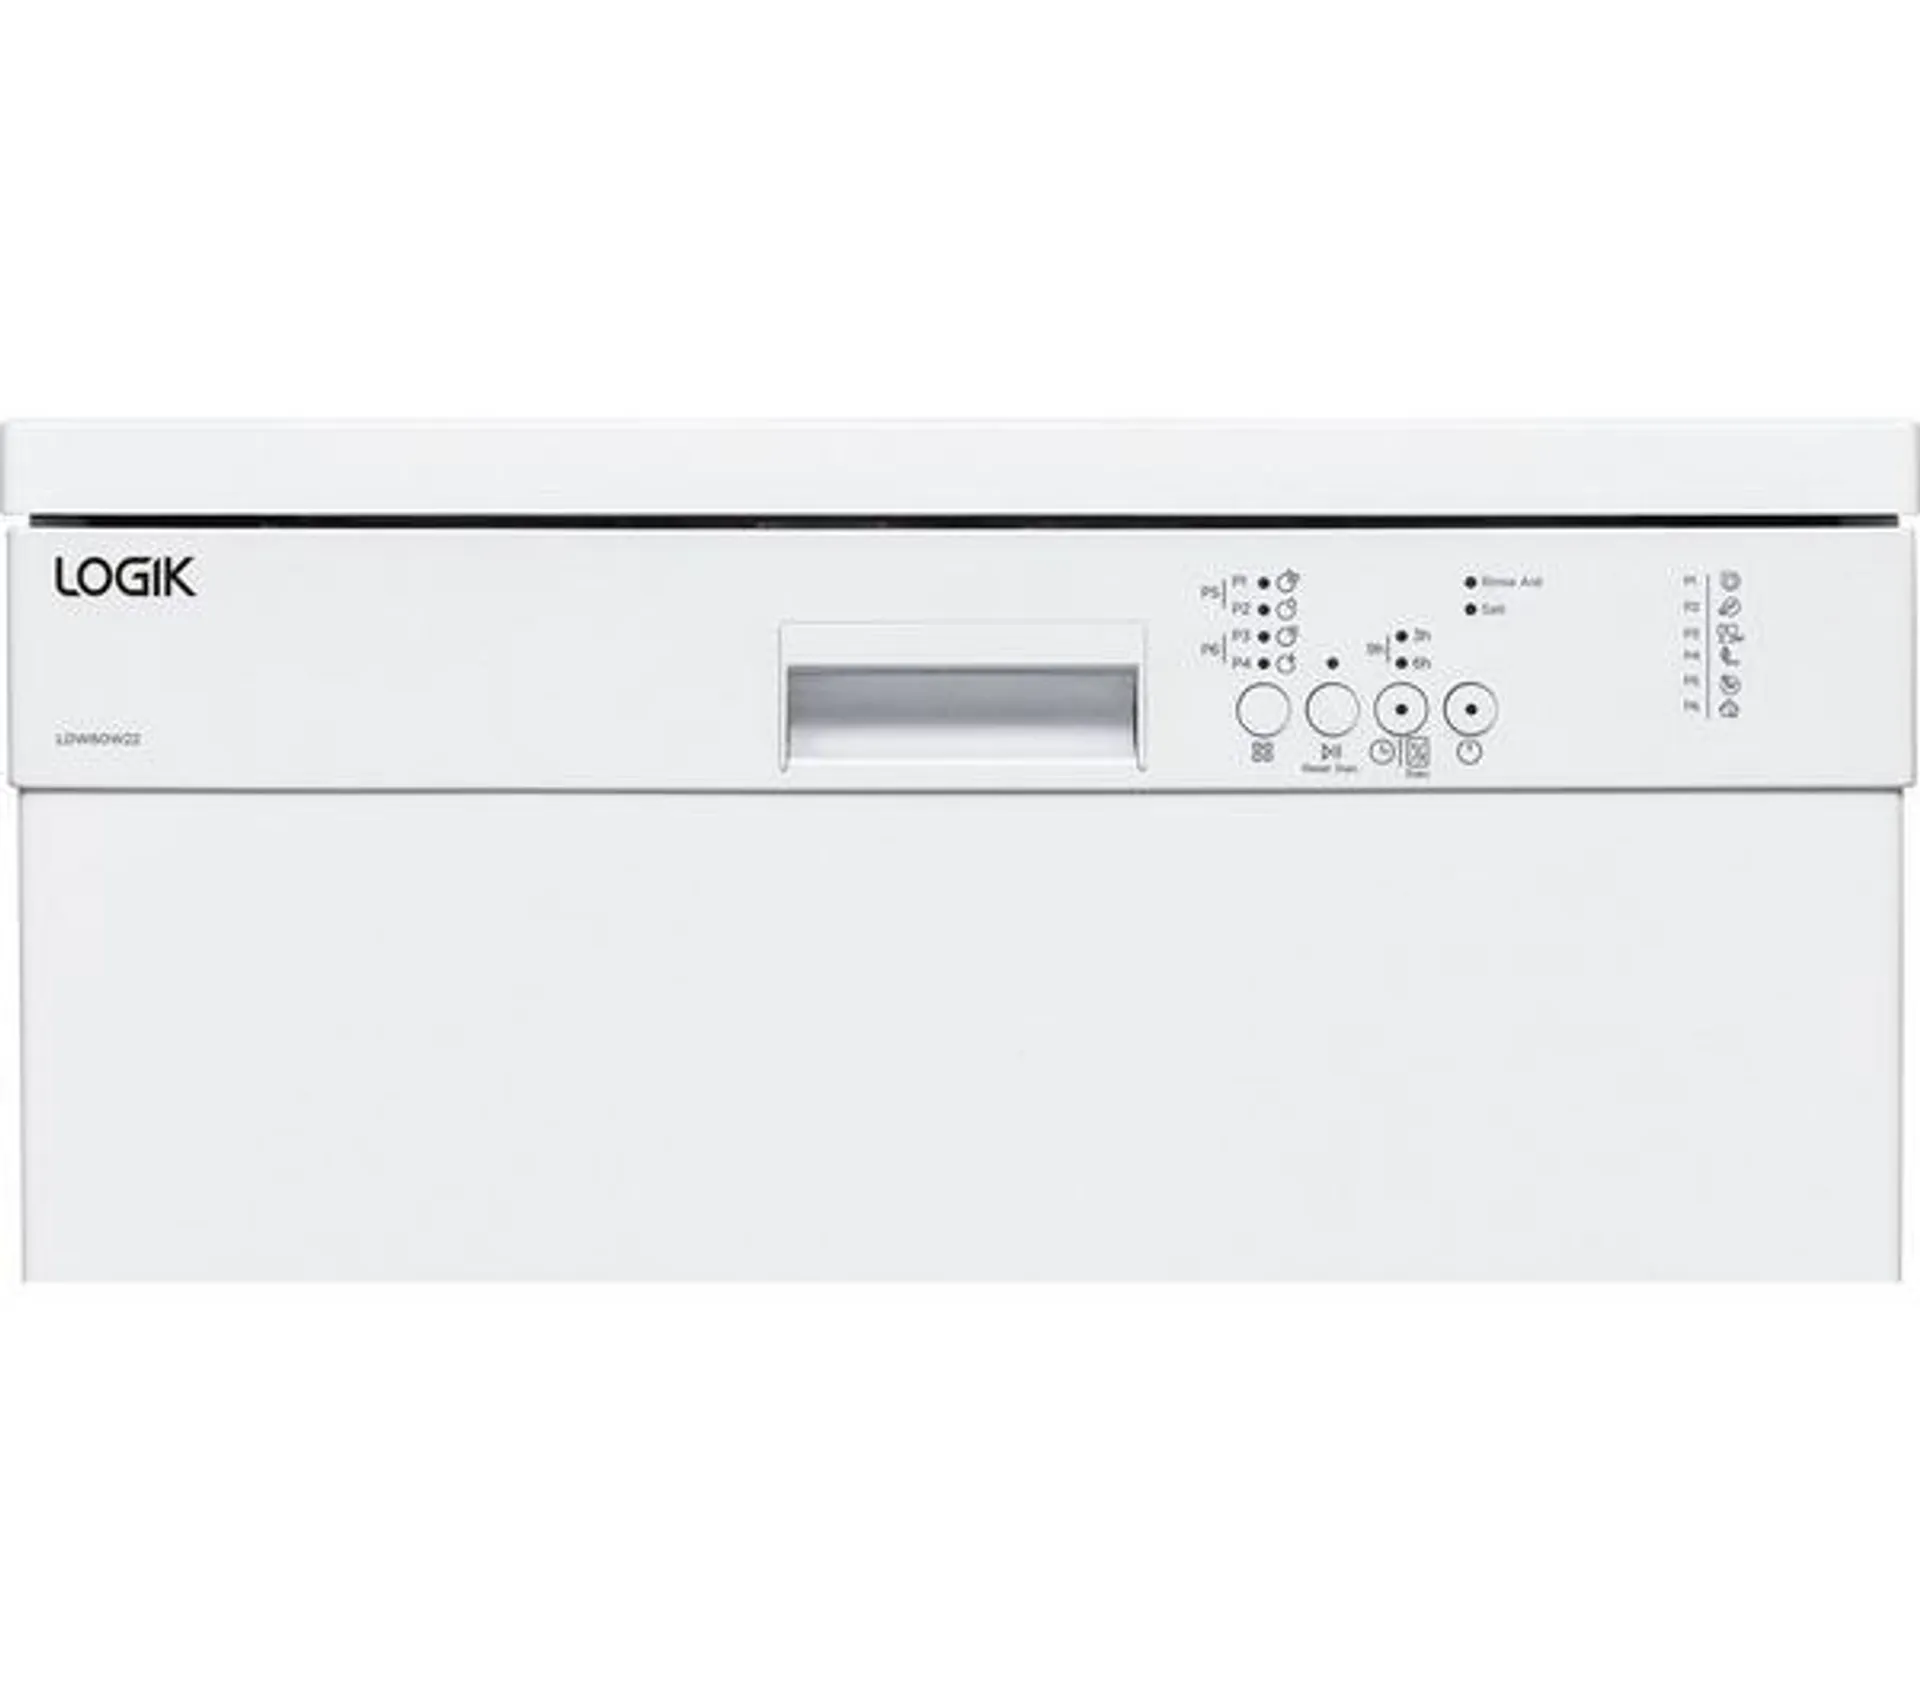 LOGIK LDW60W22 Full-size Dishwasher - White